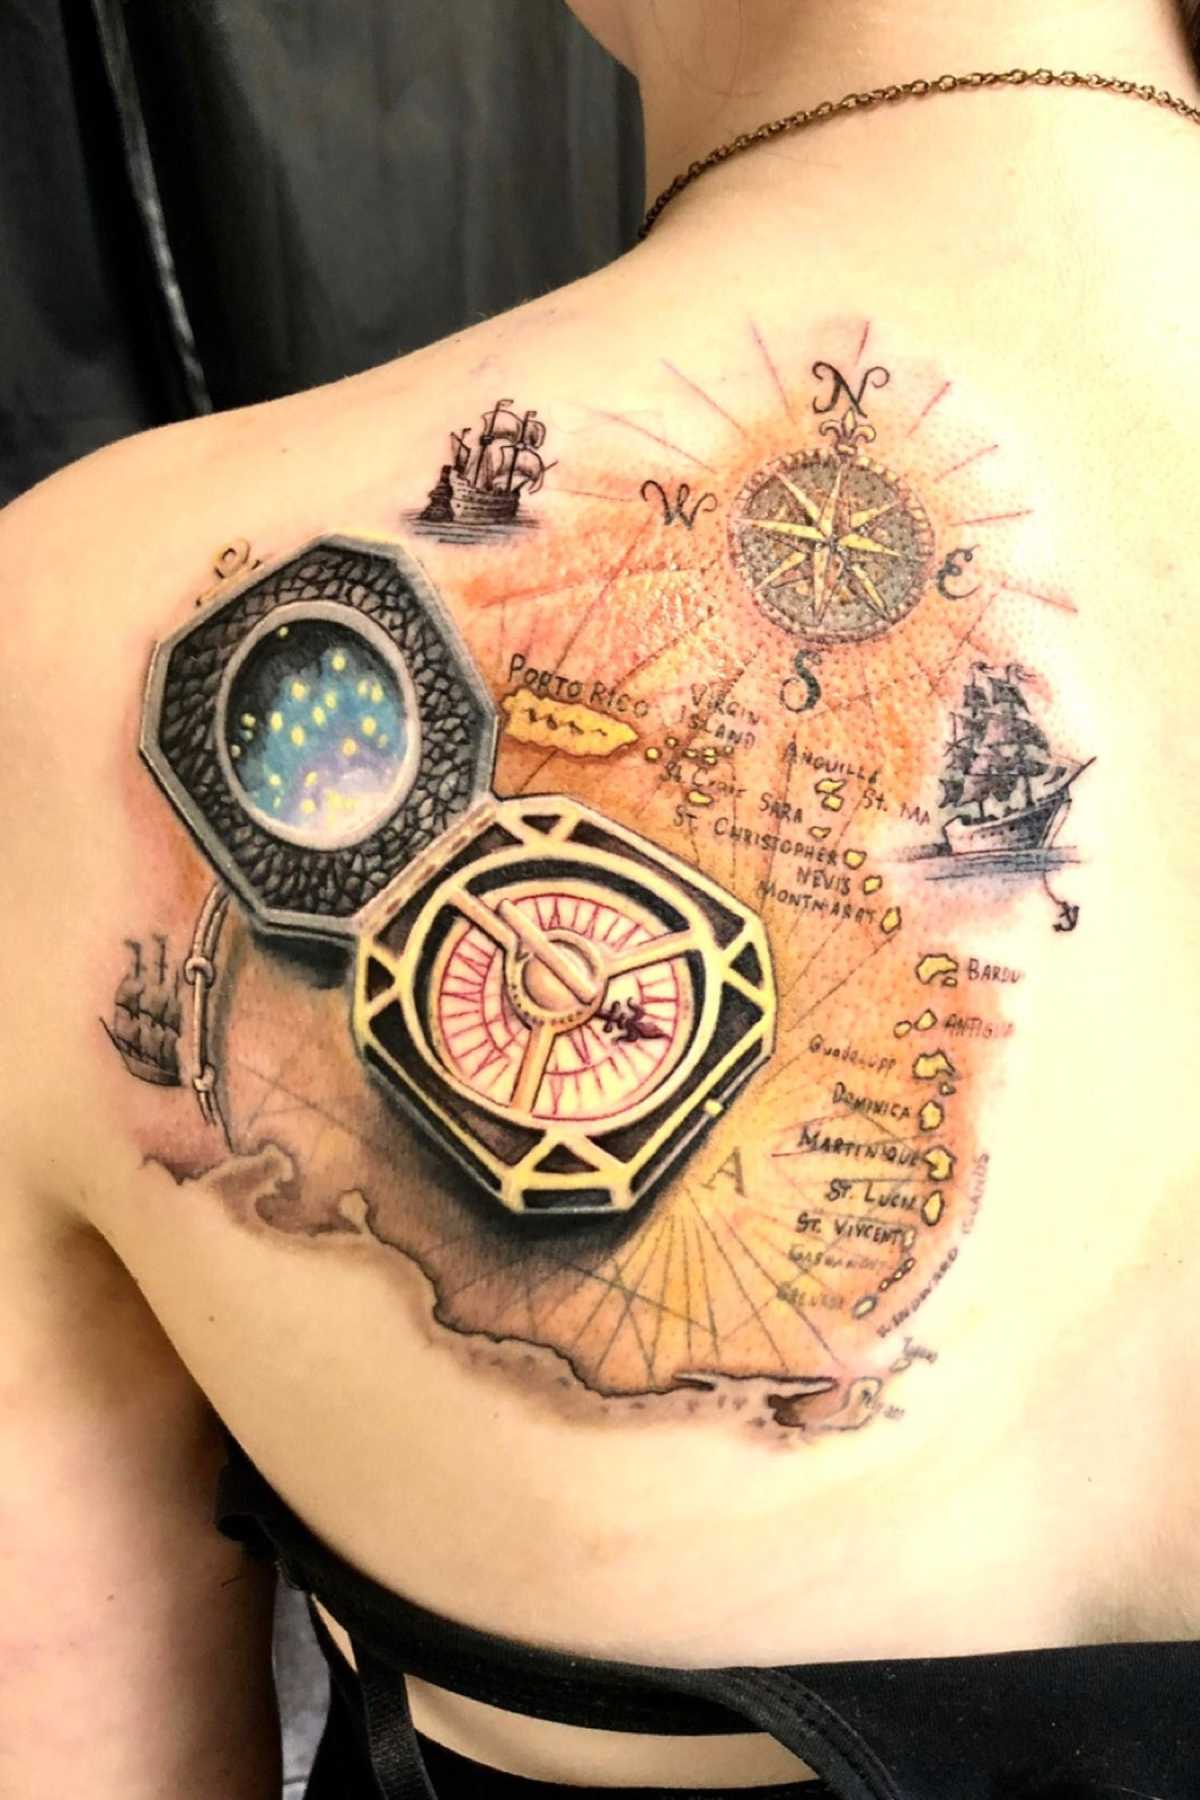 piratesofthecaribbeancompass #compass #colourful  Tattooing inks